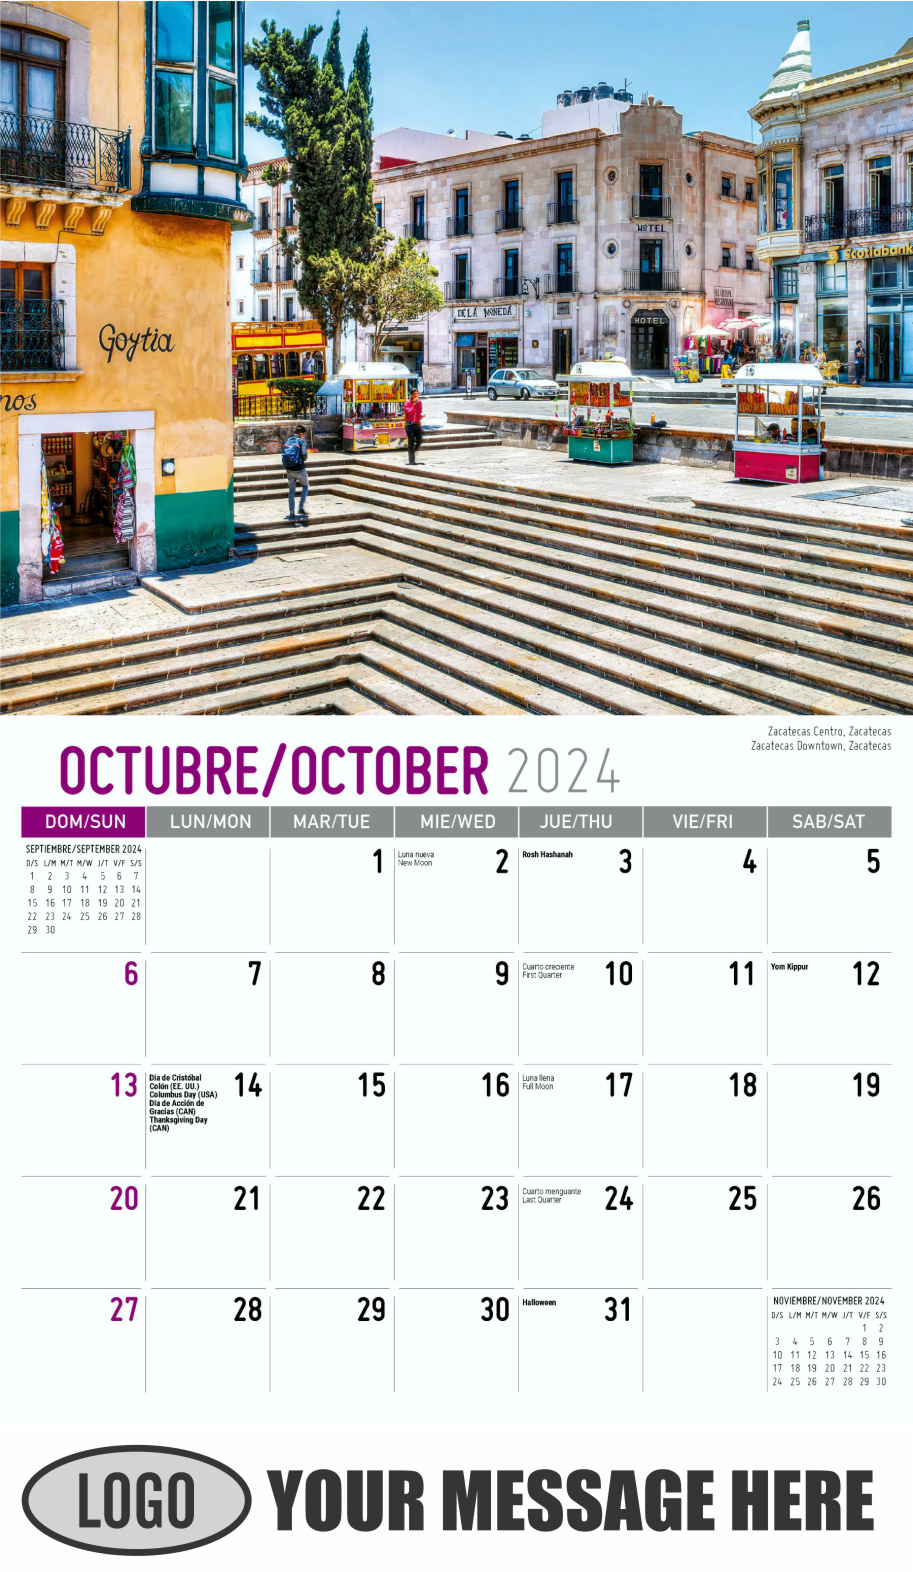 Scenes of Mexico 2024 Bilingual Business Promo Calendar - October